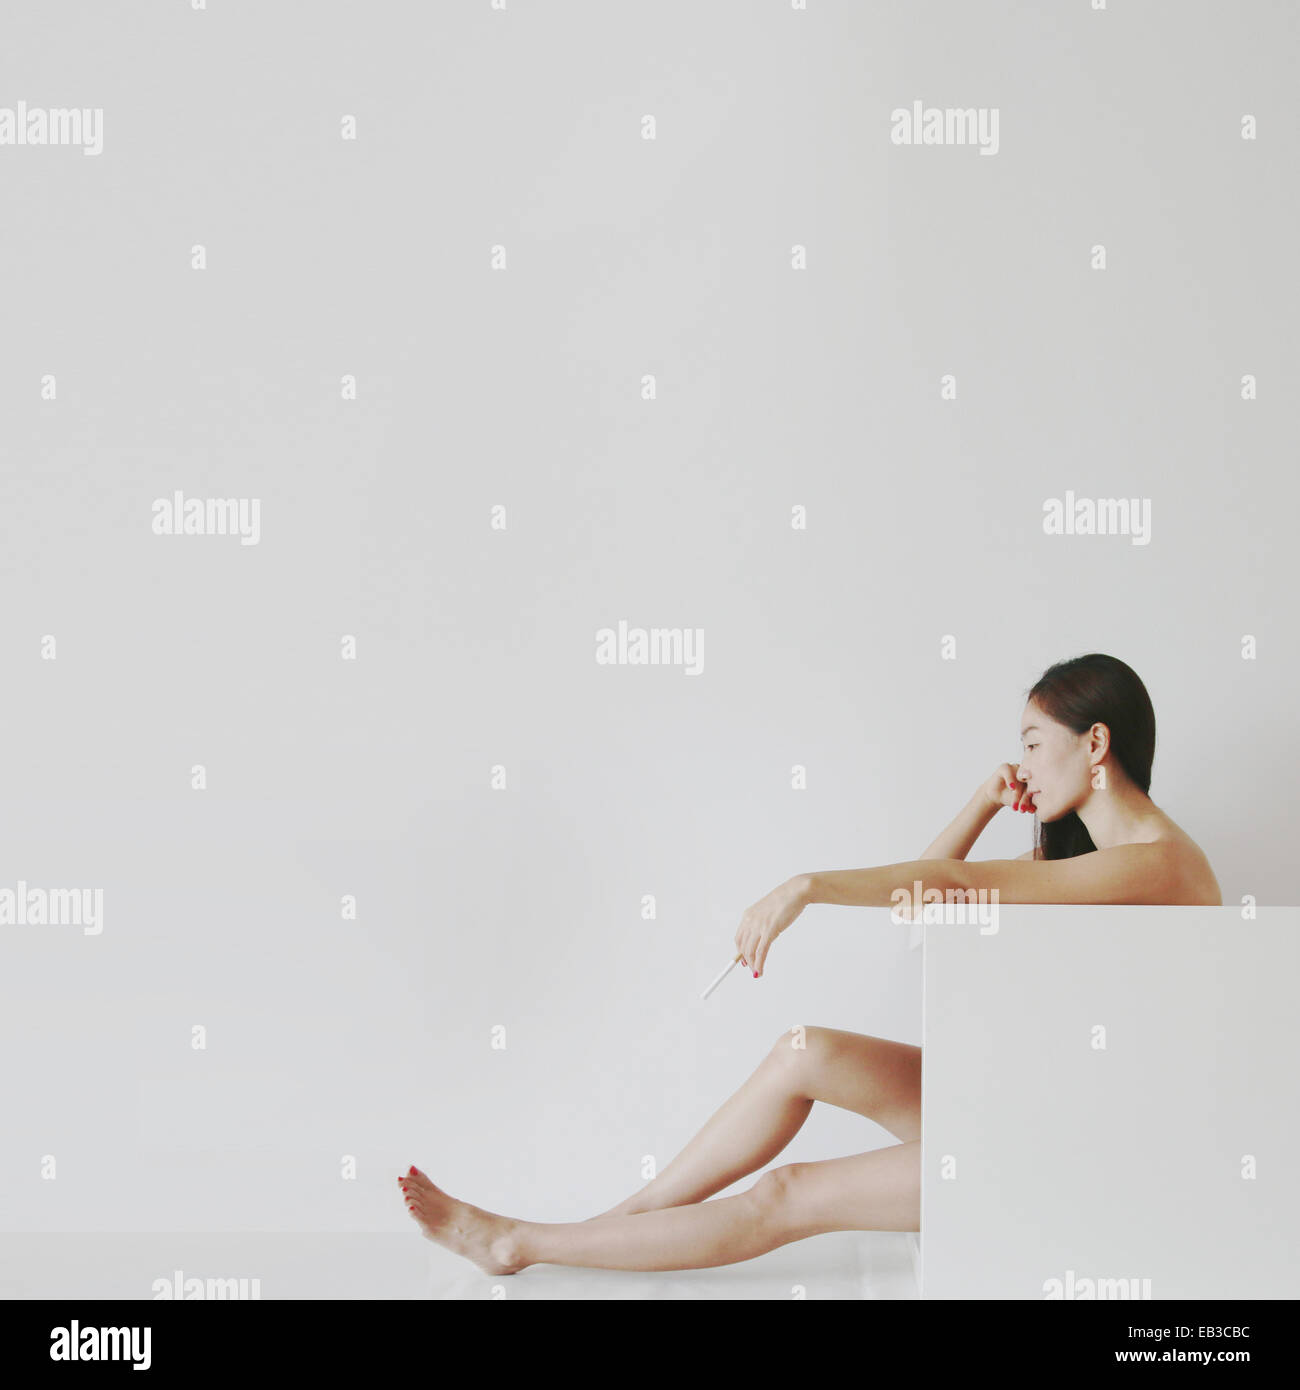 Naked woman sitting. Back view. Isolated on white. ilustração do Stock